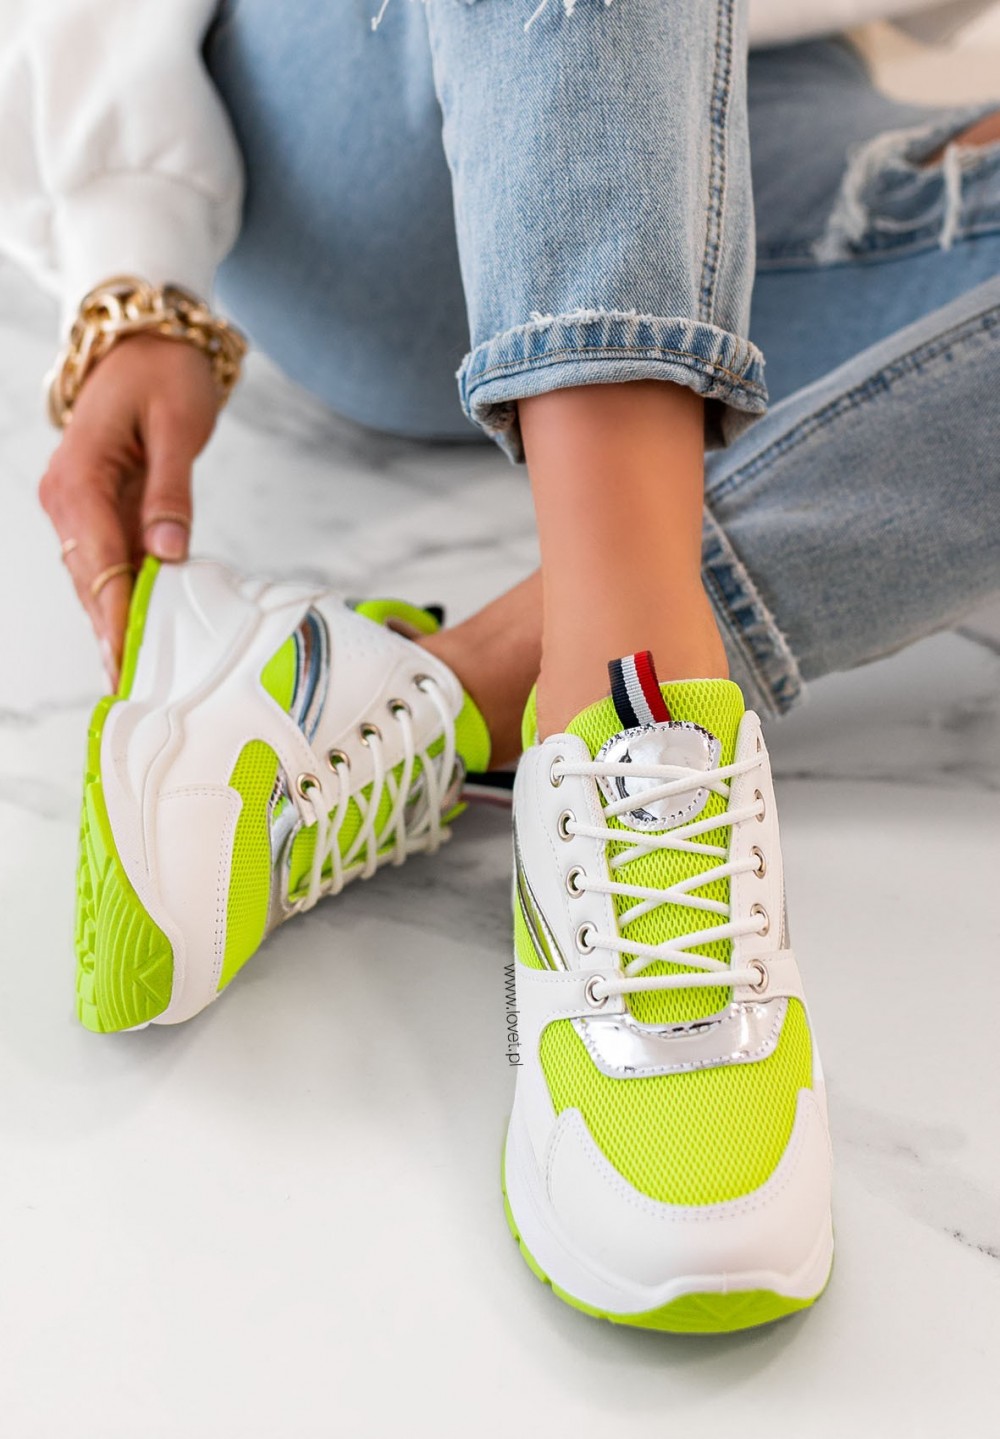 Trampki Sneakersy Sznurowane Zielone Neon Rita